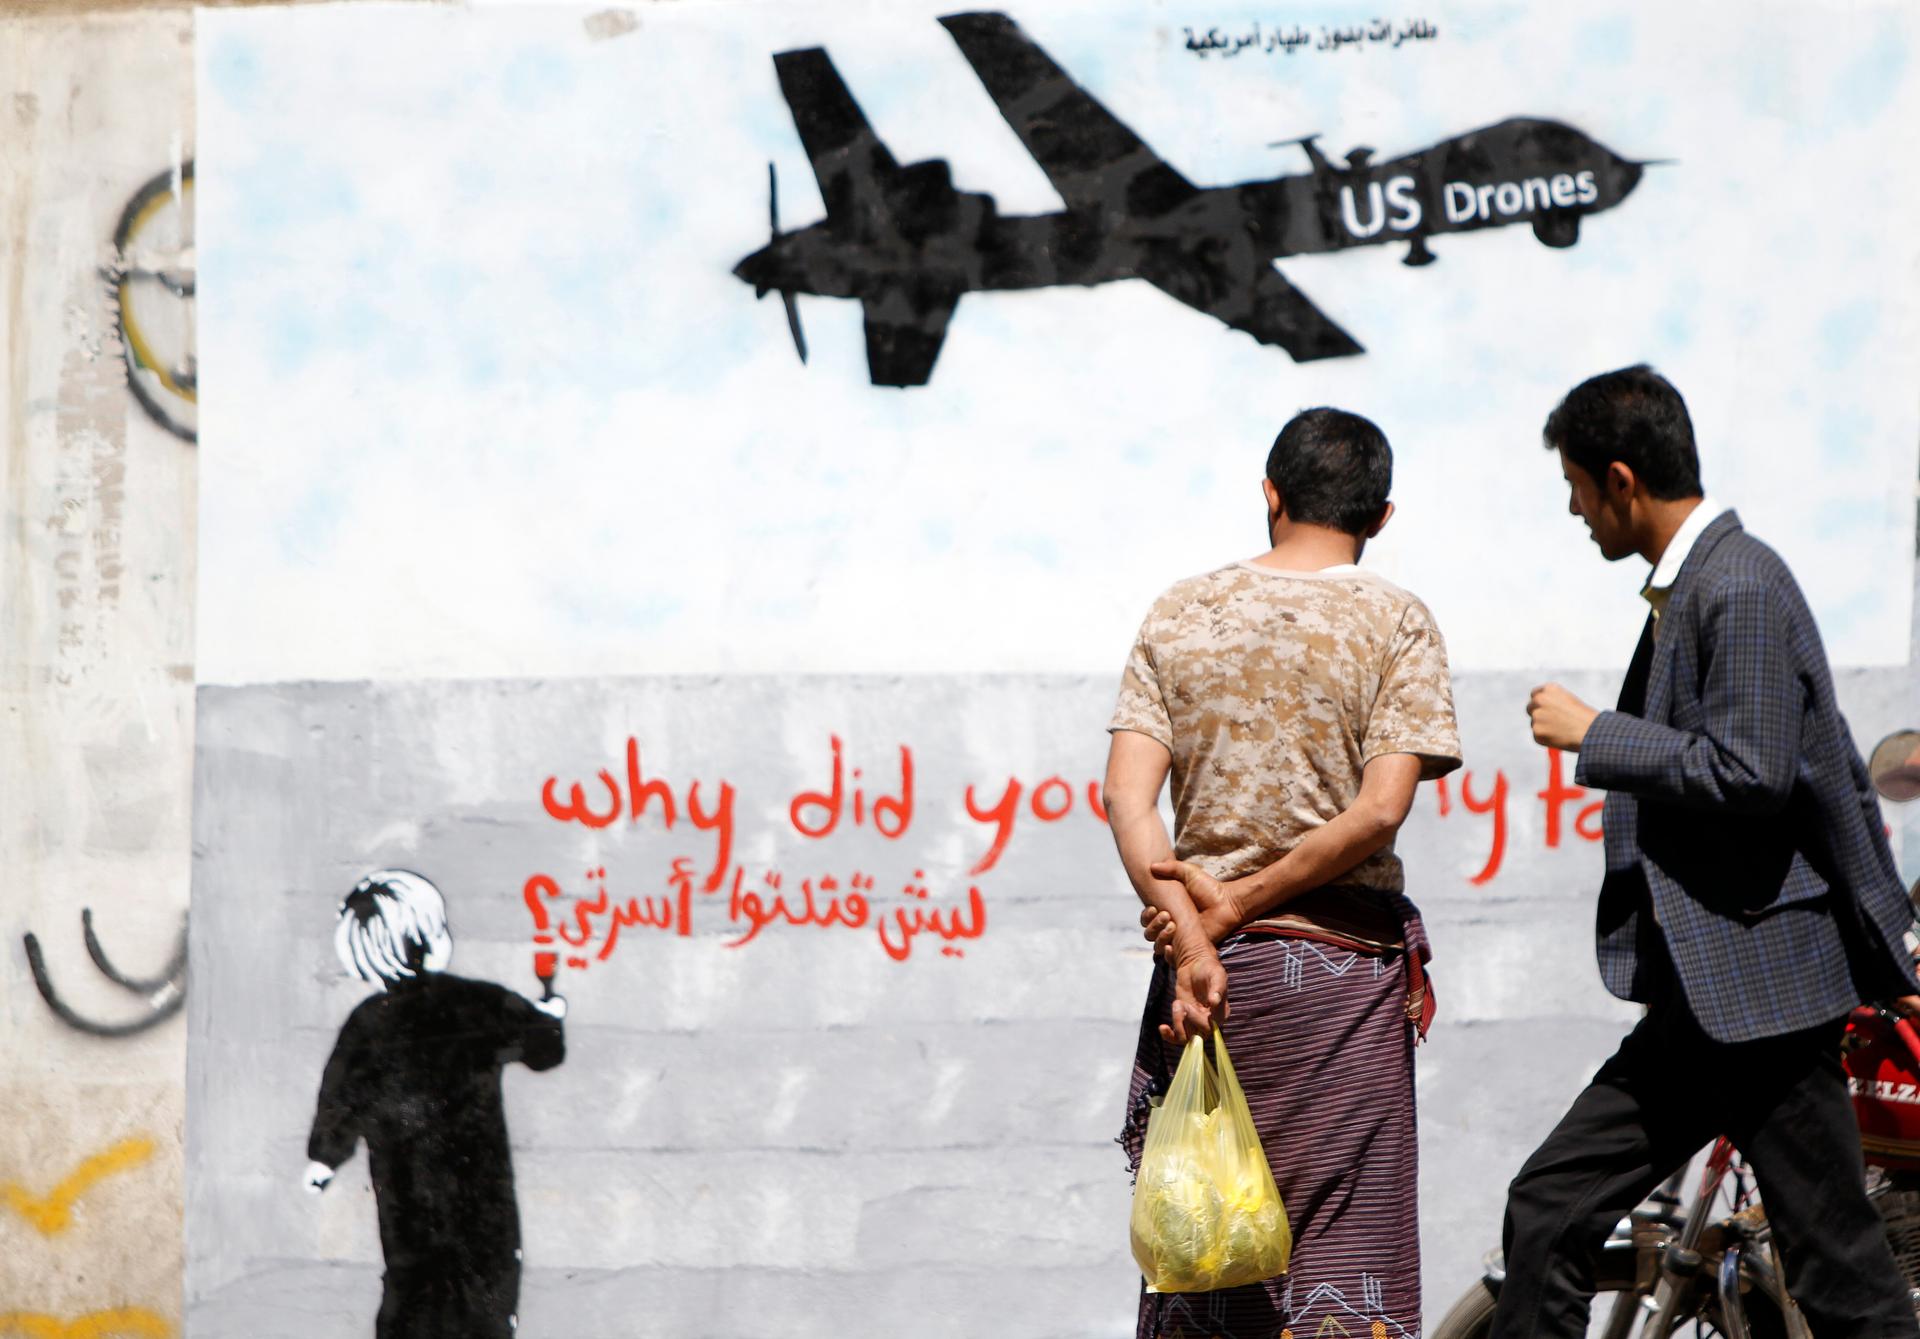 Men look at wall graffiti depicting a American drone along a street in Sana'a, Yemen, on November 9, 2013. 